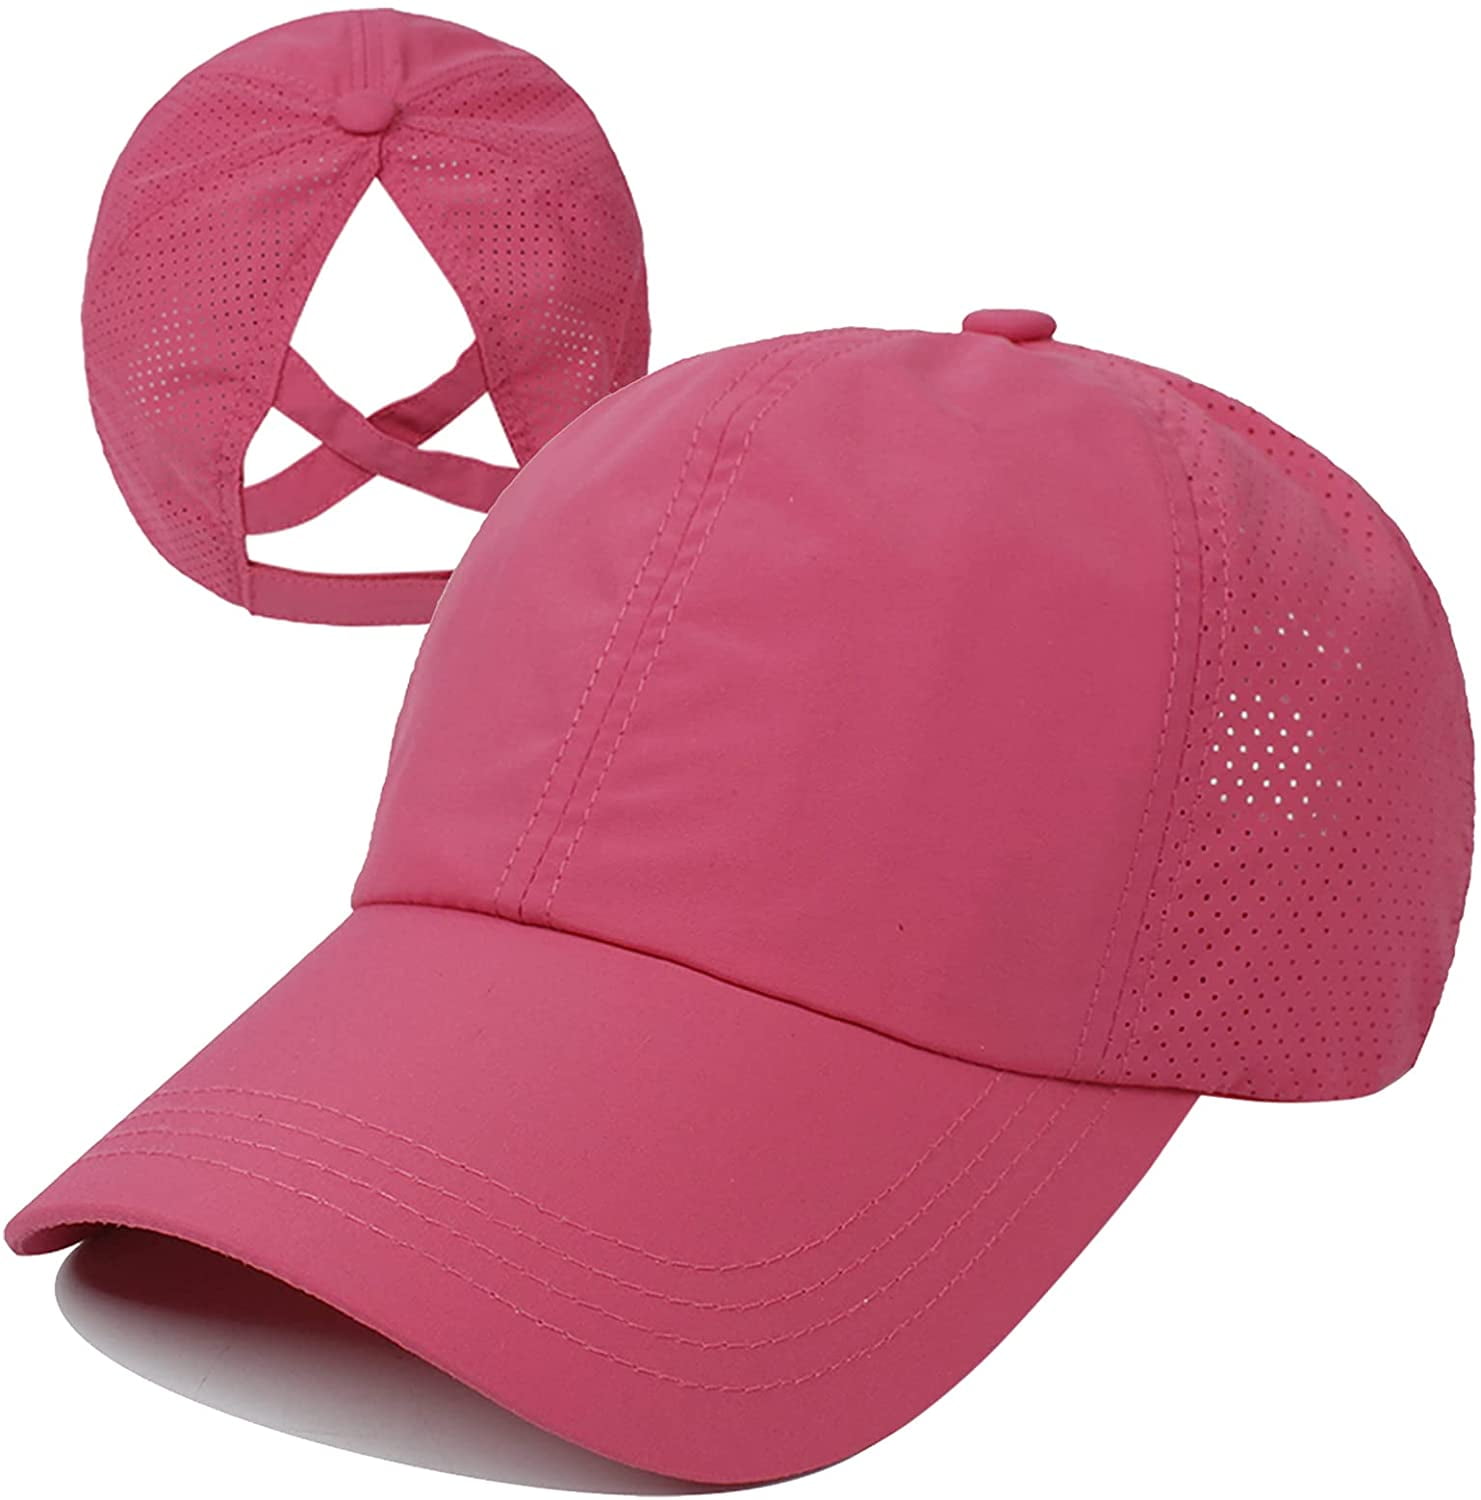 Criss Cross Ponytail Hats for Women Ponytail Vintage Washed Dad Hat Messy High Bun Ponycaps Plain Baseball Cap Women Hats 